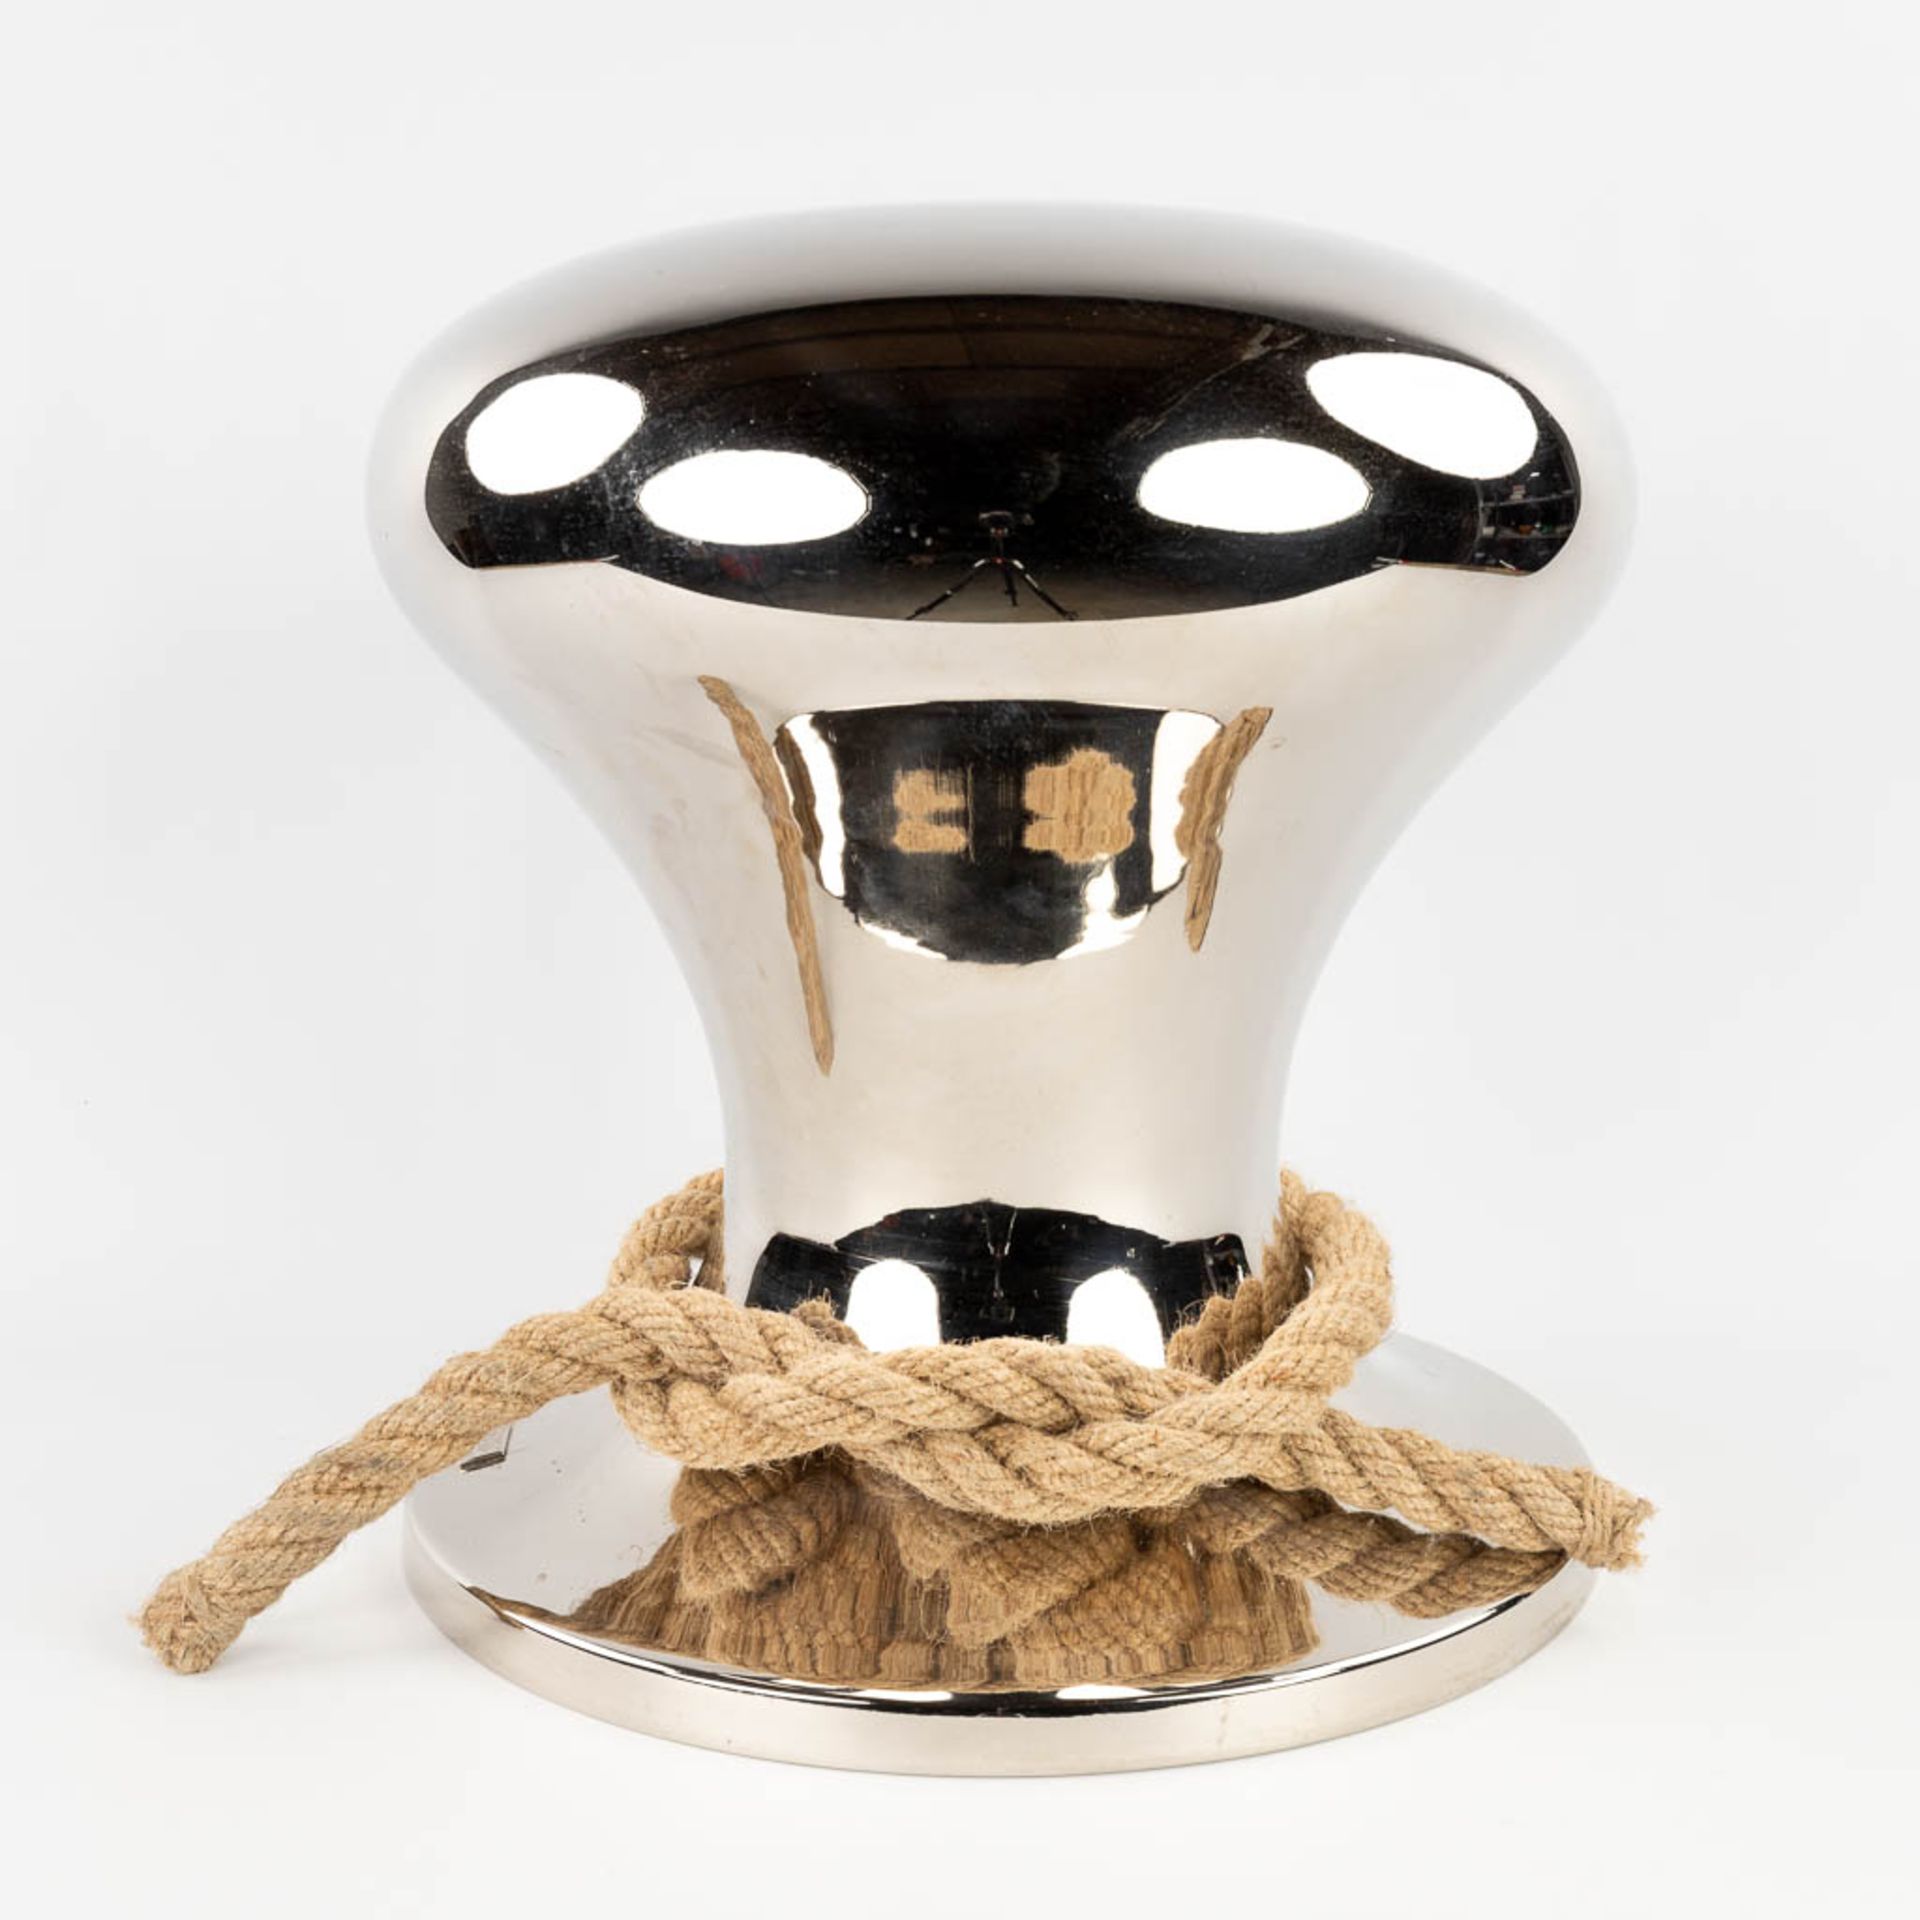 Philippi Design 'Hamburger Hocker Stool', a stool in the shape of a bollard. (H: 43 x D: 38 cm) - Image 3 of 10